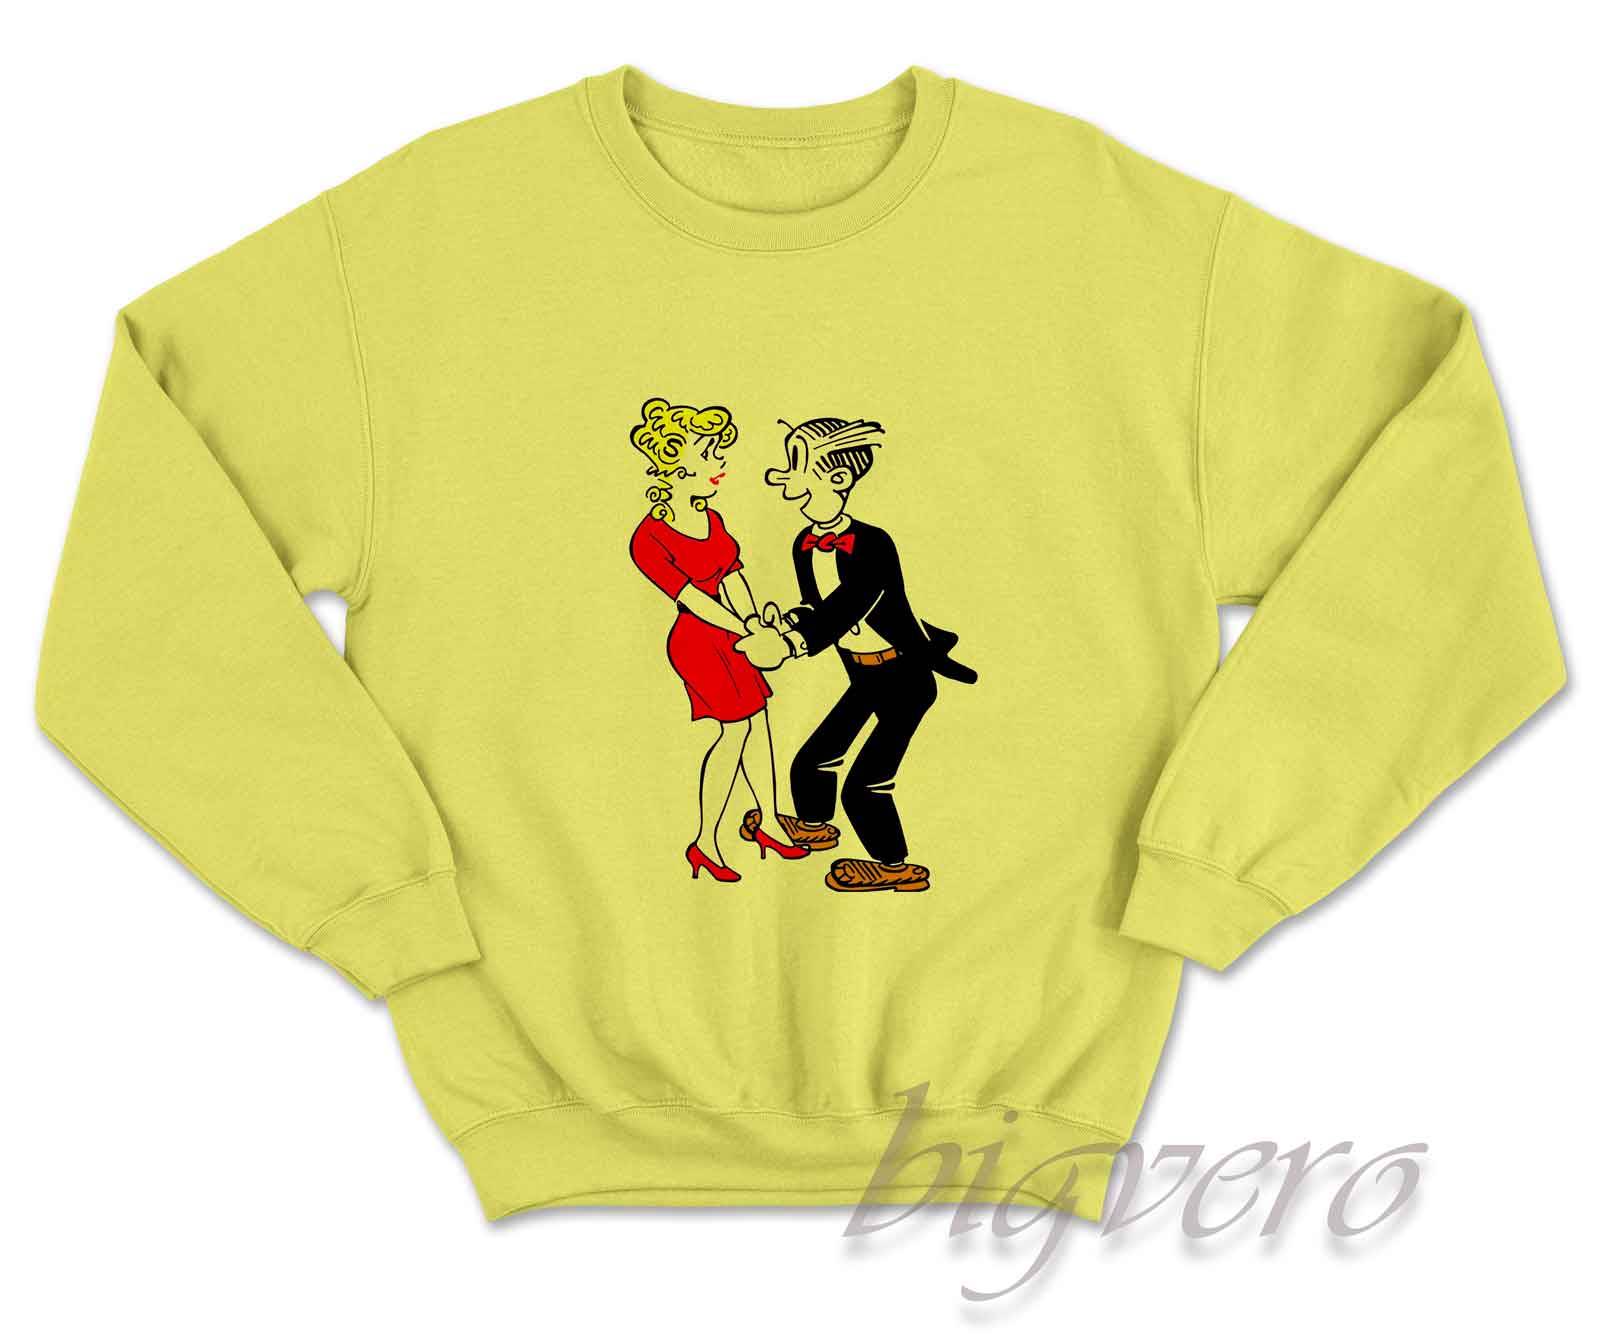 Dagwood and Blondie Adult Unisex Sweatshirt